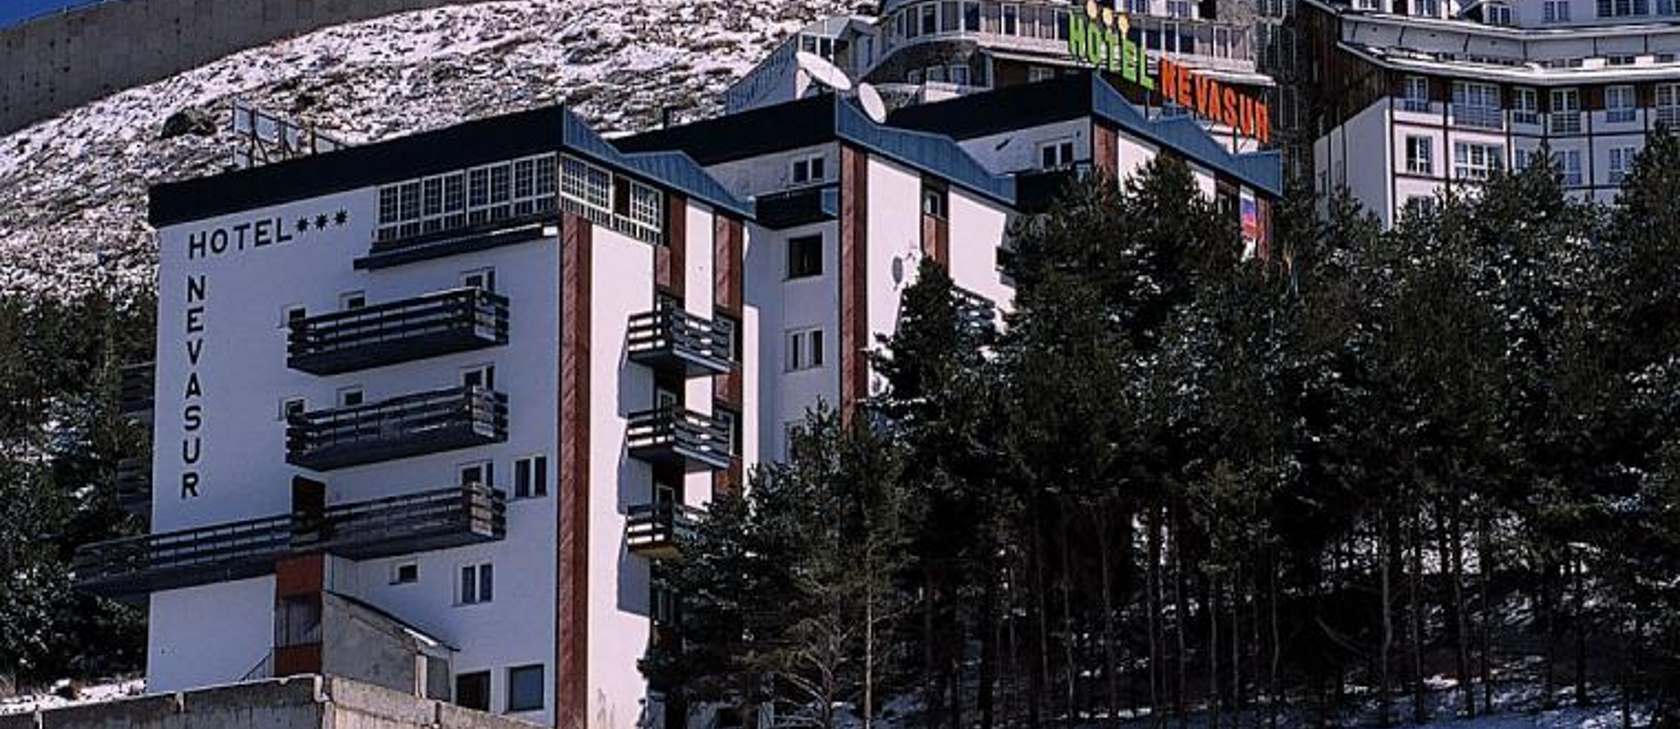 Chollo Hotel Nevasur de Sierra Nevada (Sierra Nevada - GRANADA)